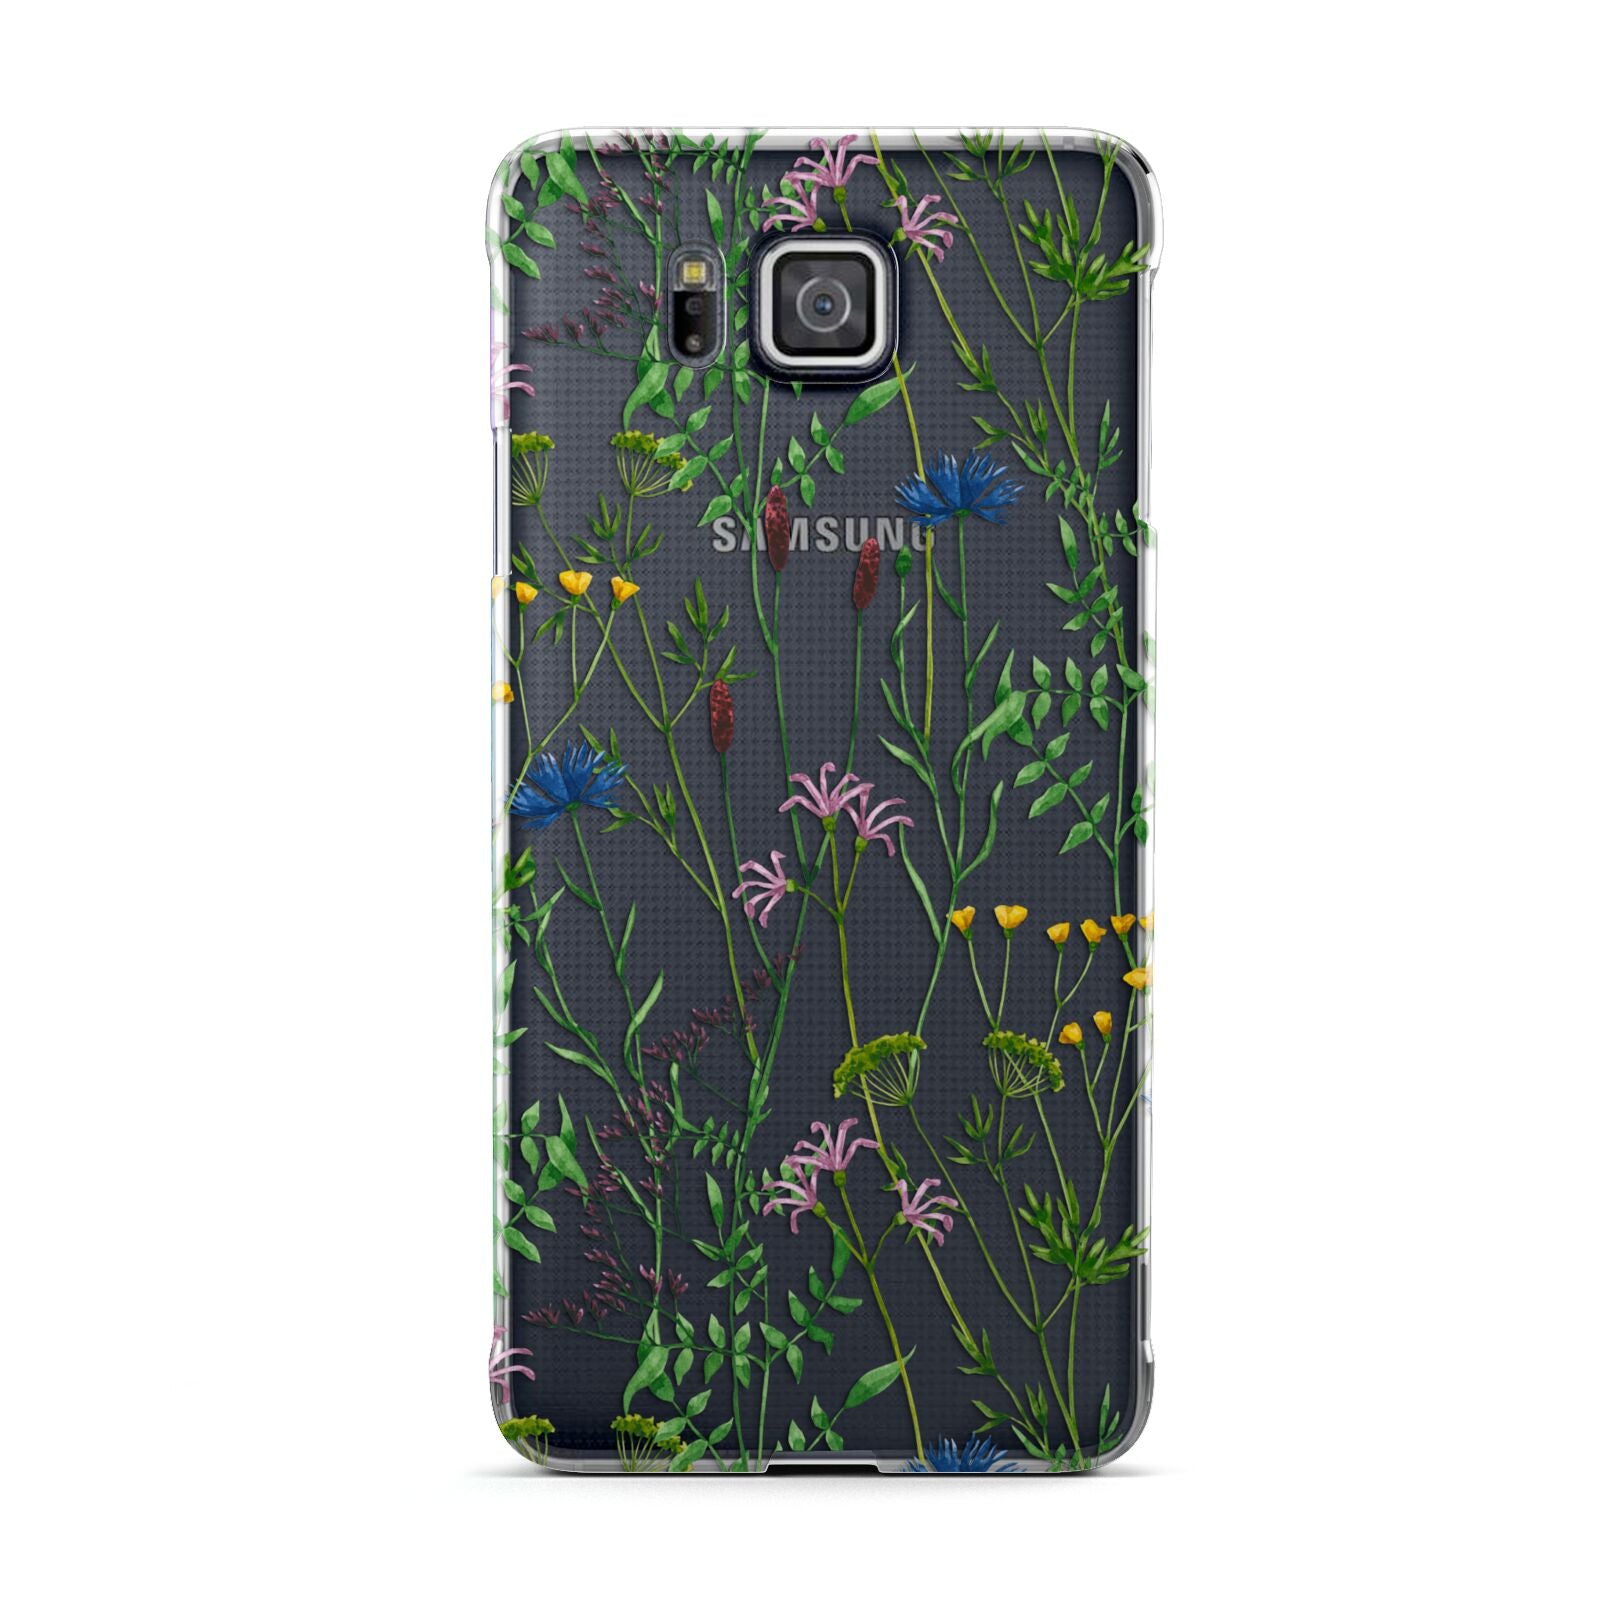 Wildflowers Samsung Galaxy Alpha Case